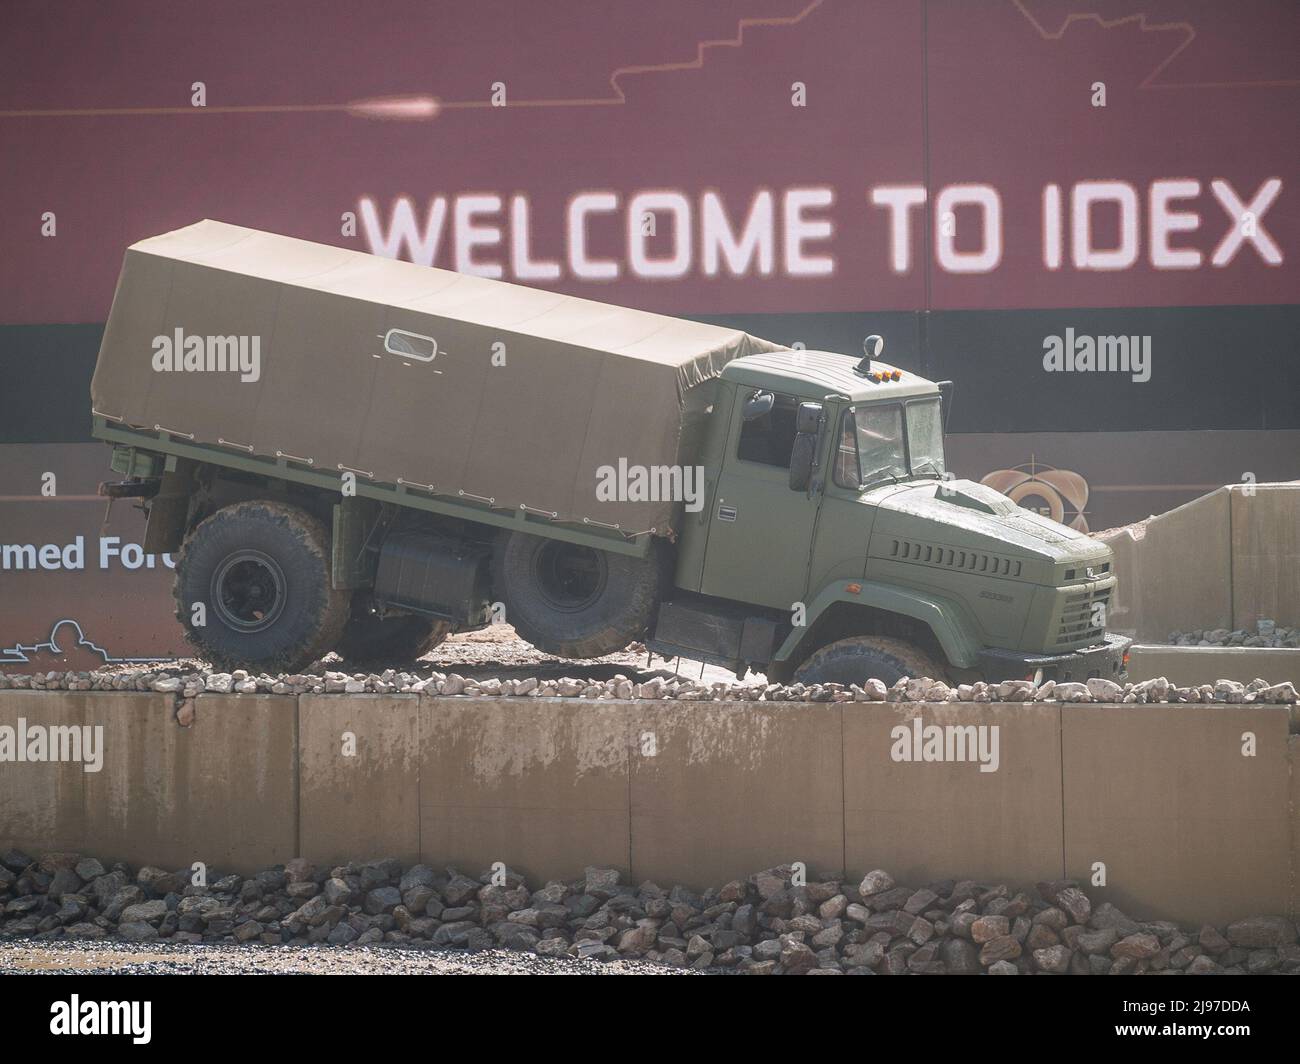 Abu Dhabi, VAE - 23. Februar. 2011: KRAZ-5233BE HMTV (High Mobility Tactical Vehicle) auf der IDEX 2011 Militärausstellung Stockfoto